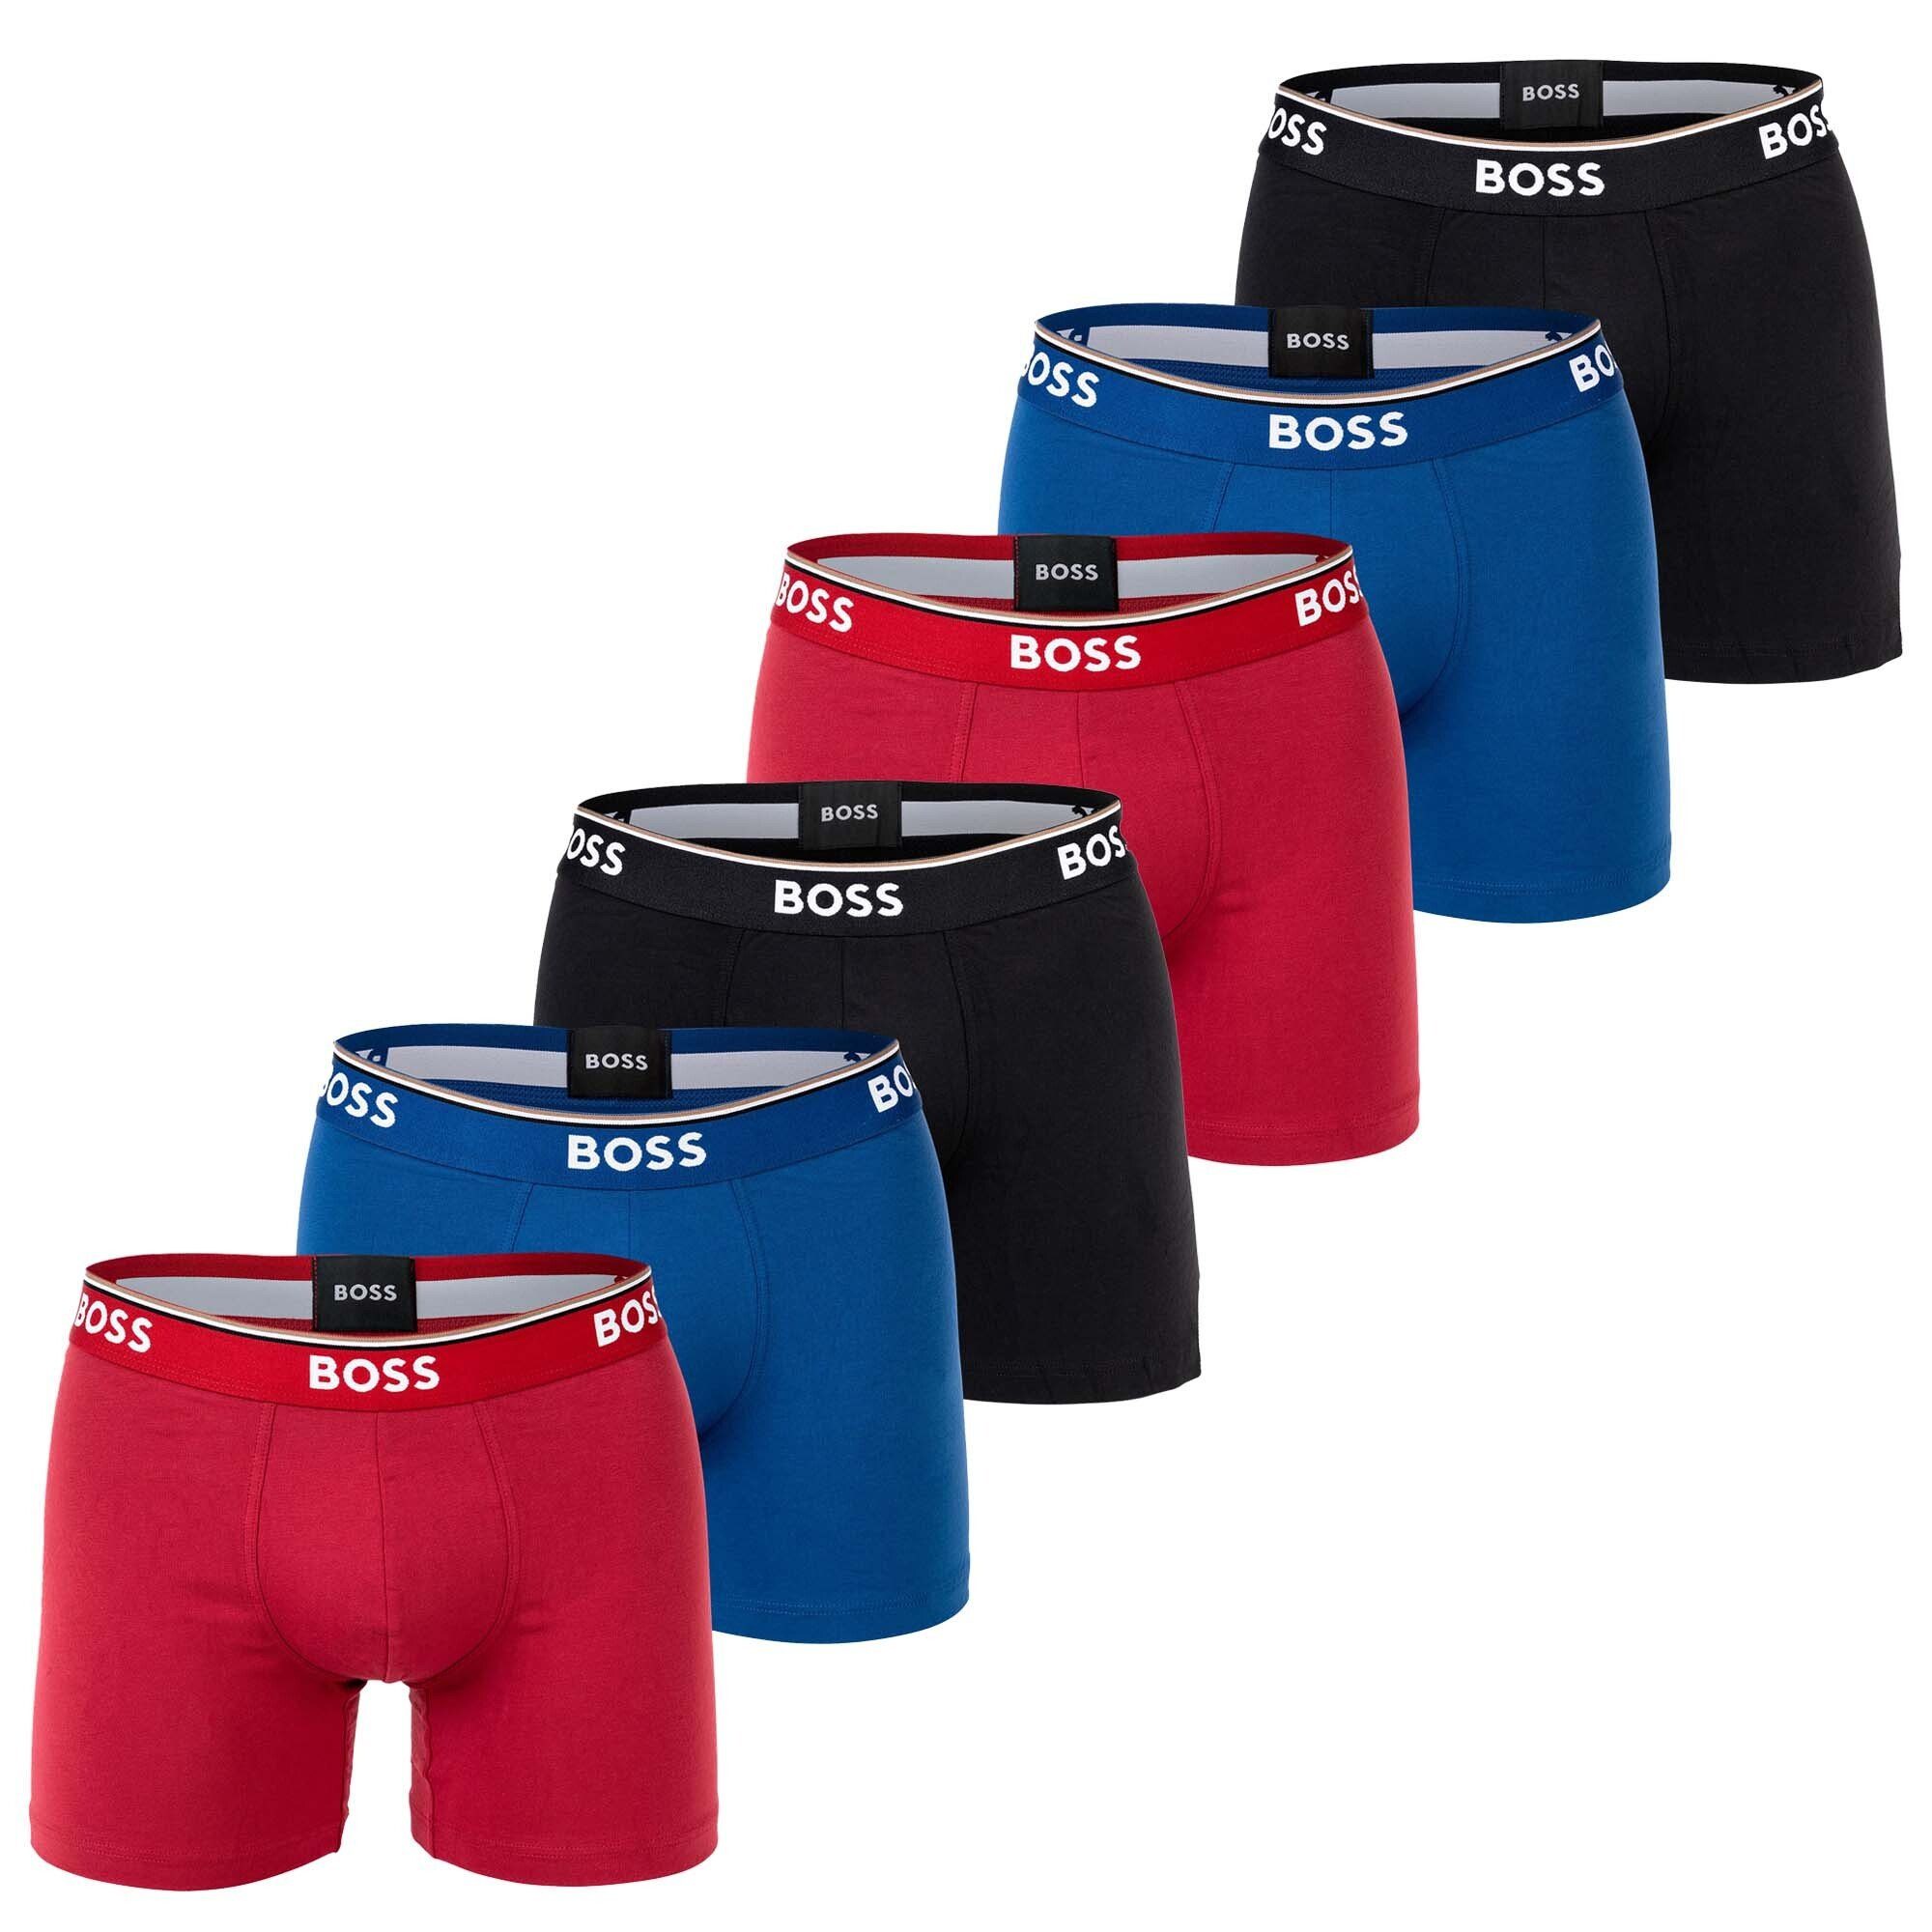 - Boxershorts, BOSS Boxer 6er Rot/Blau/Schwarz 6P Herren Briefs Boxer Pack